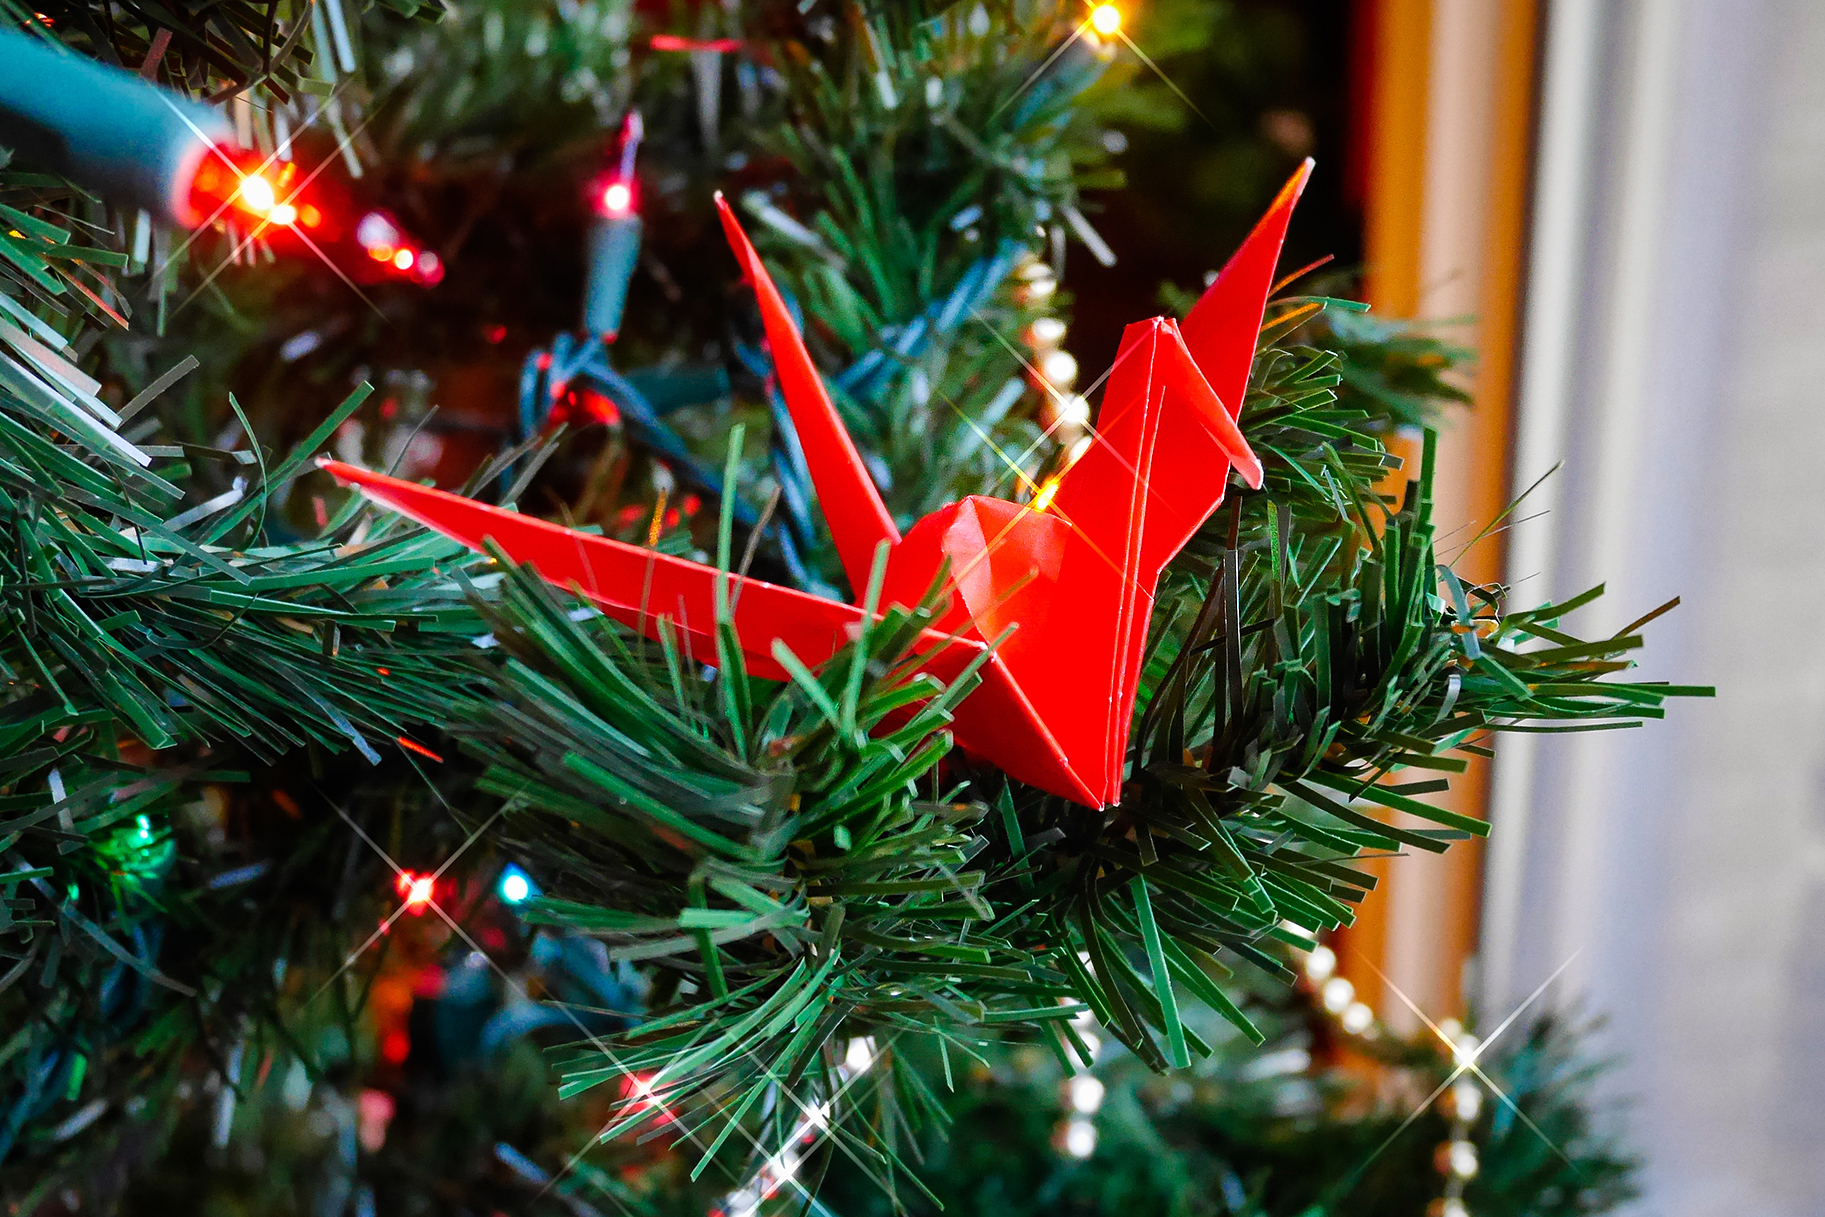 Origami Crane Ornament Christmas Christmas Tree Decorations From Around The World Jetset